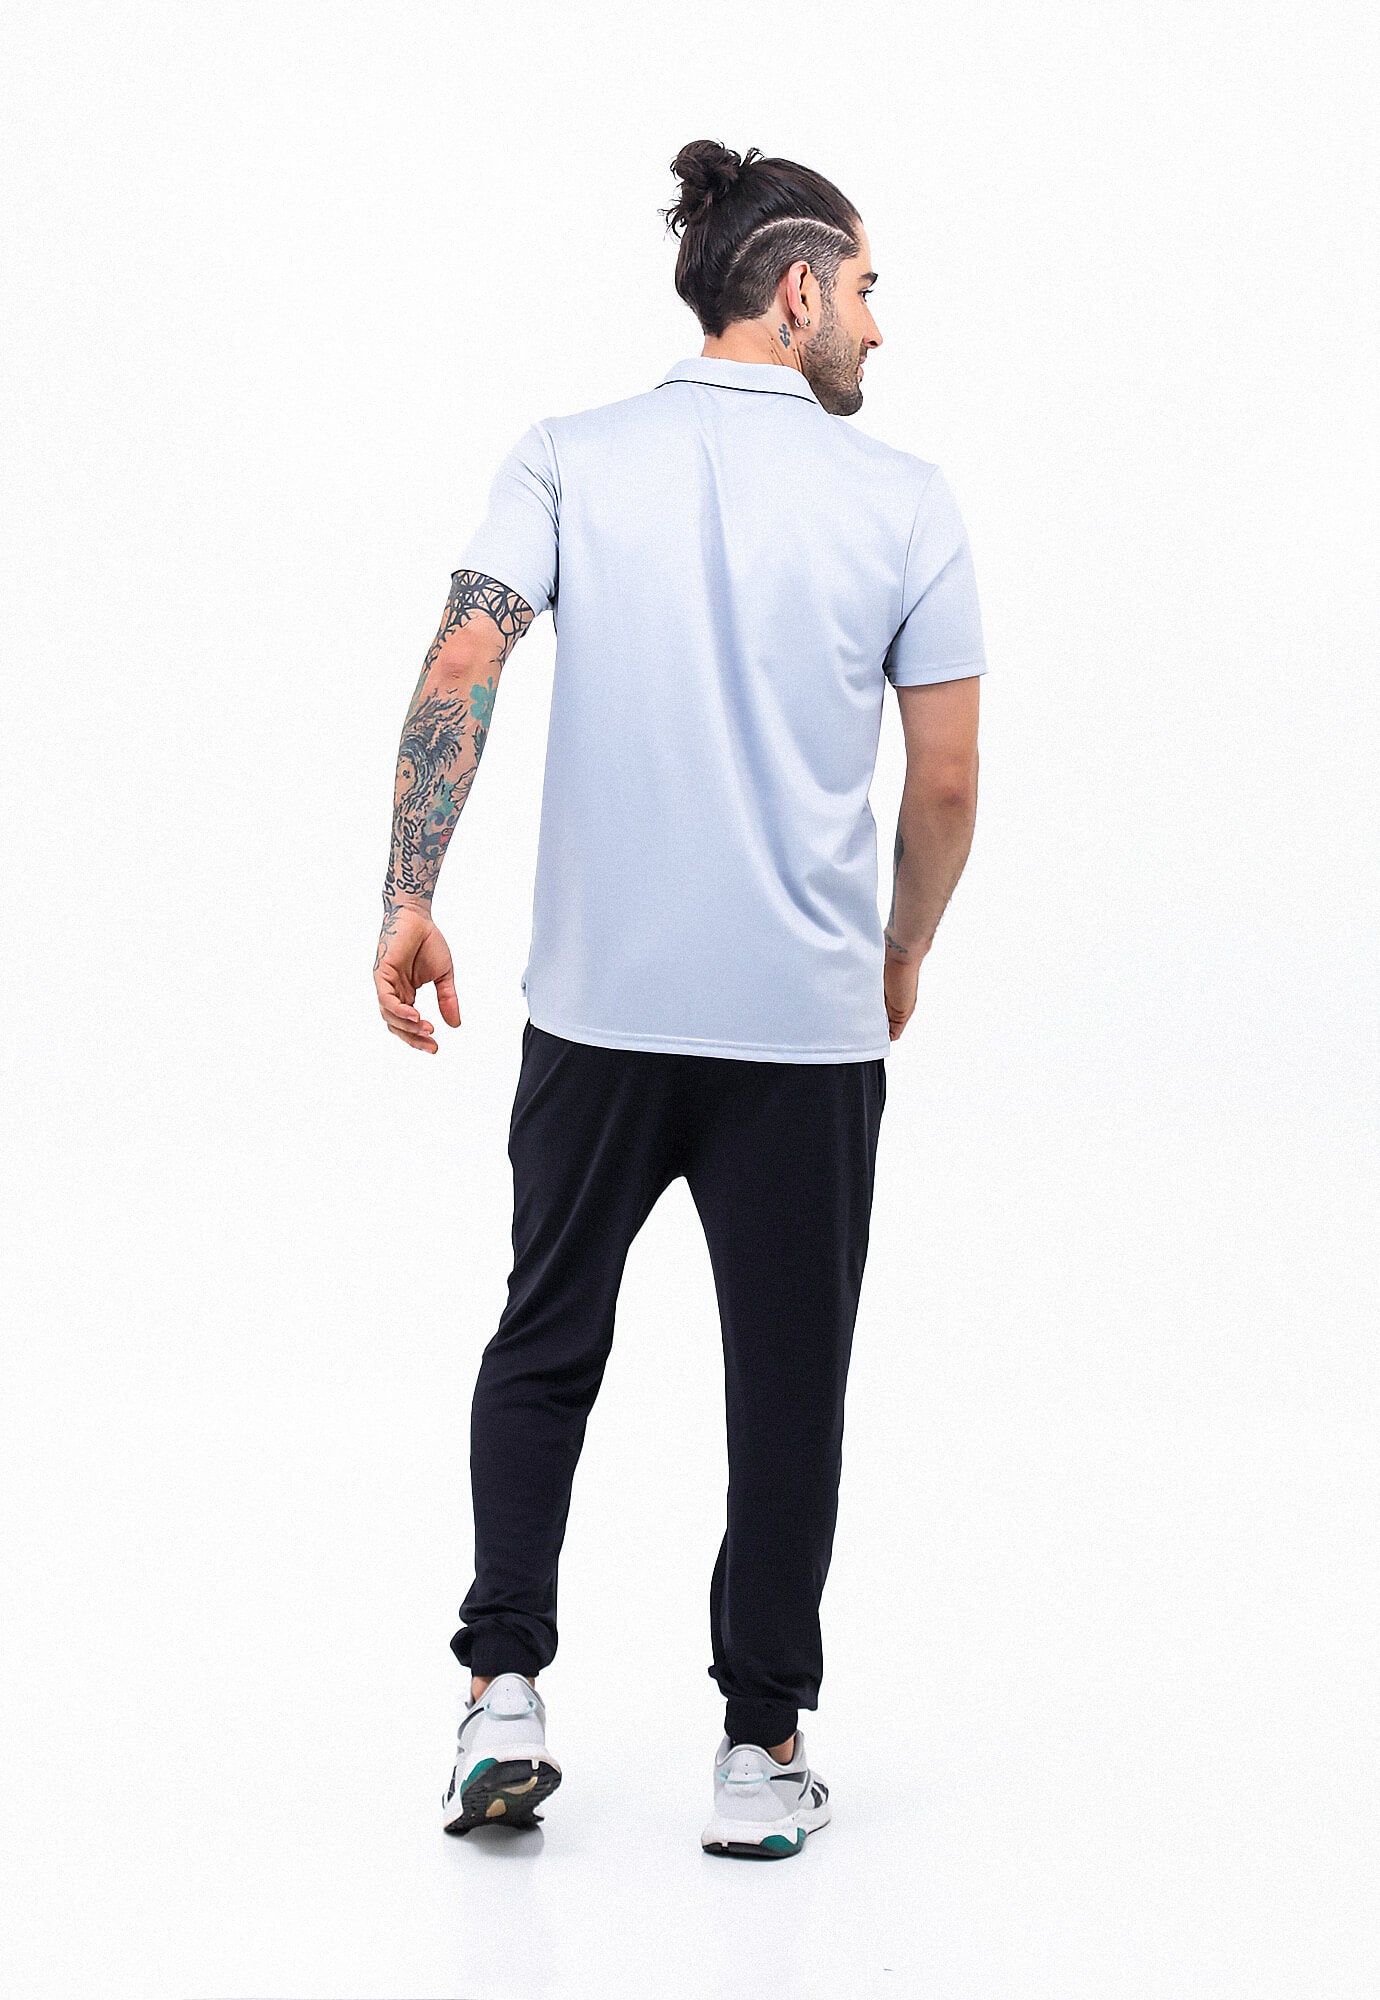 Camiseta deportiva tipo polo plata con cierre frontal en material reflectivo para hombre